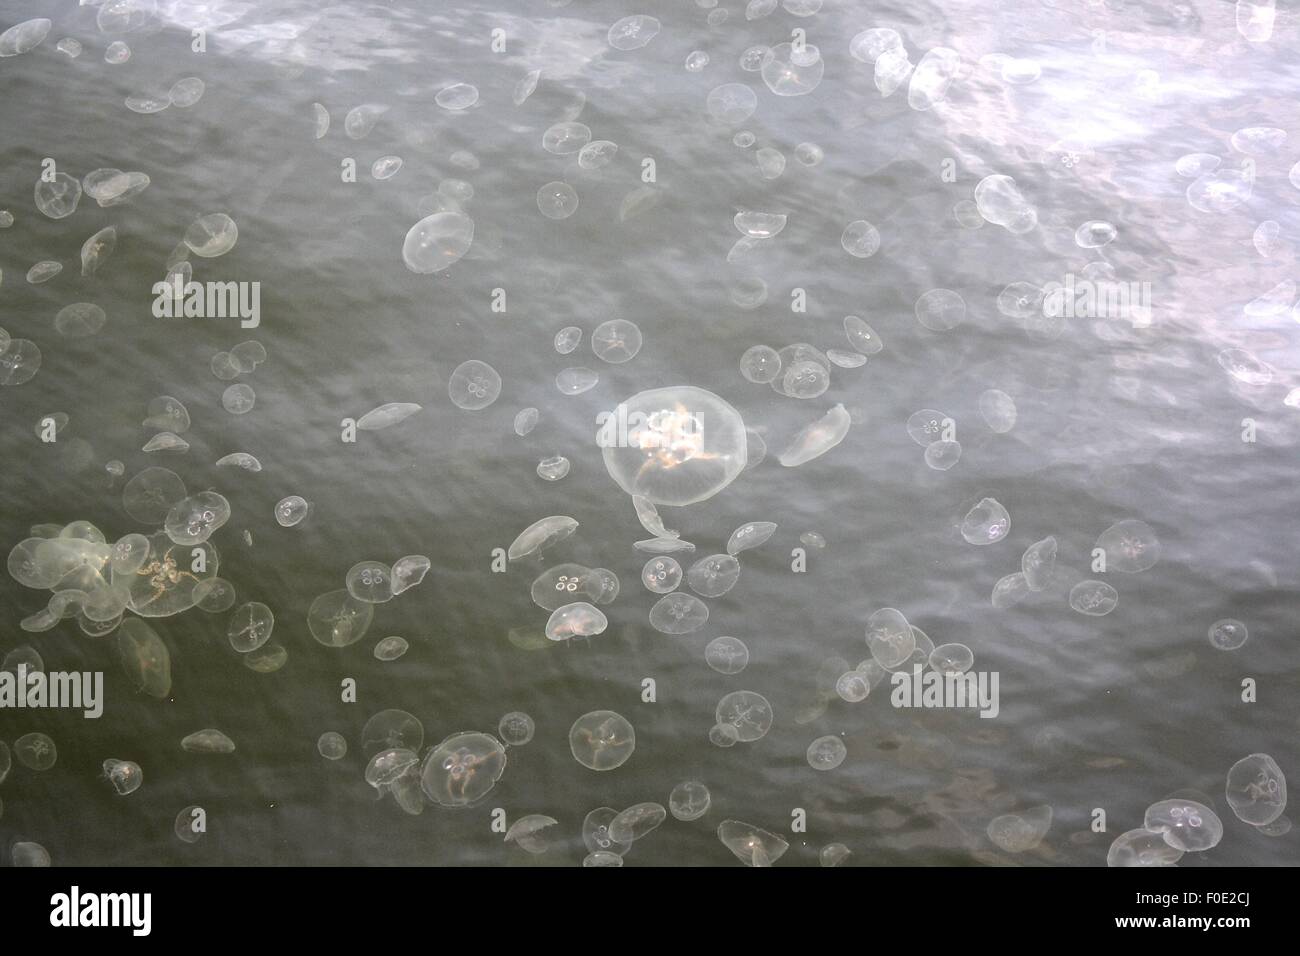 jelly fish, germany, flensburg, east sea, water, sea life Stock Photo